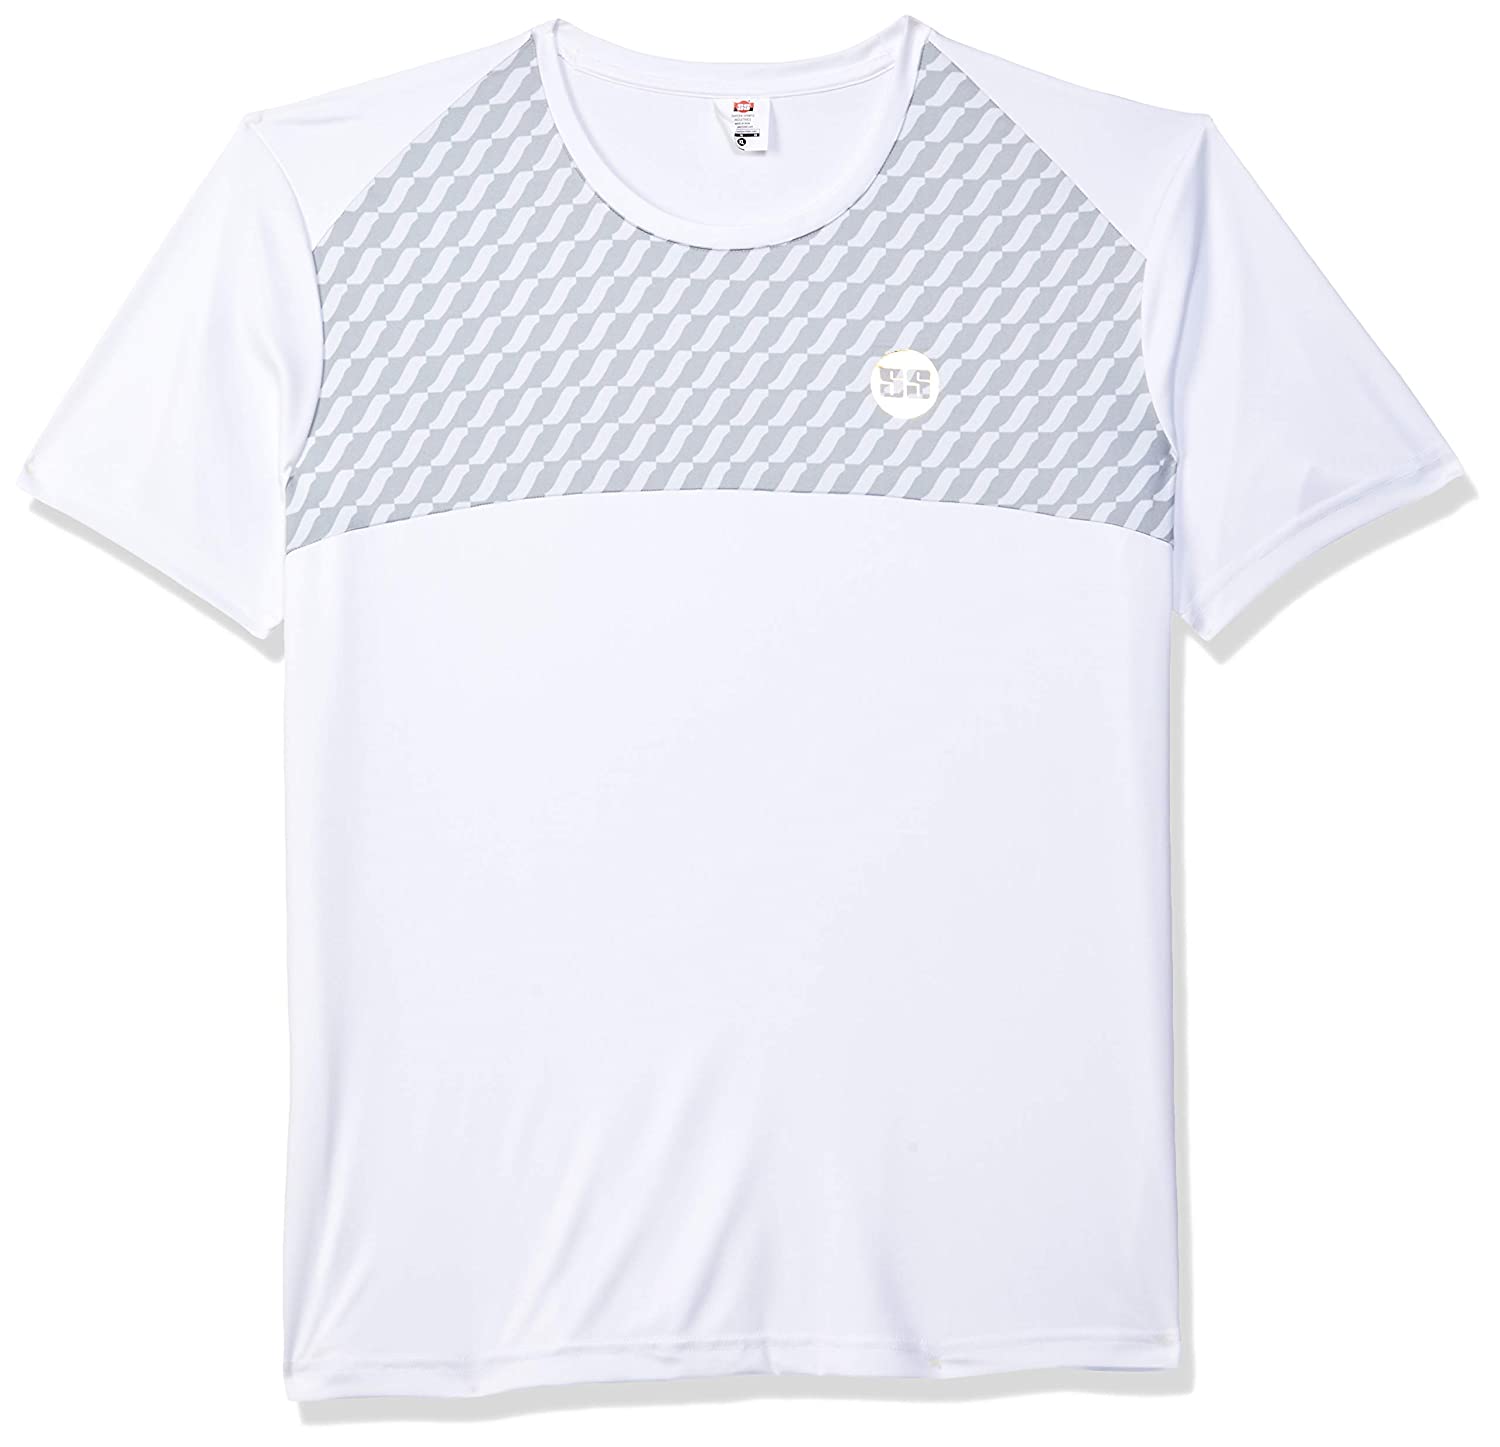 SS Round Neck T-Shirt Super (Color)